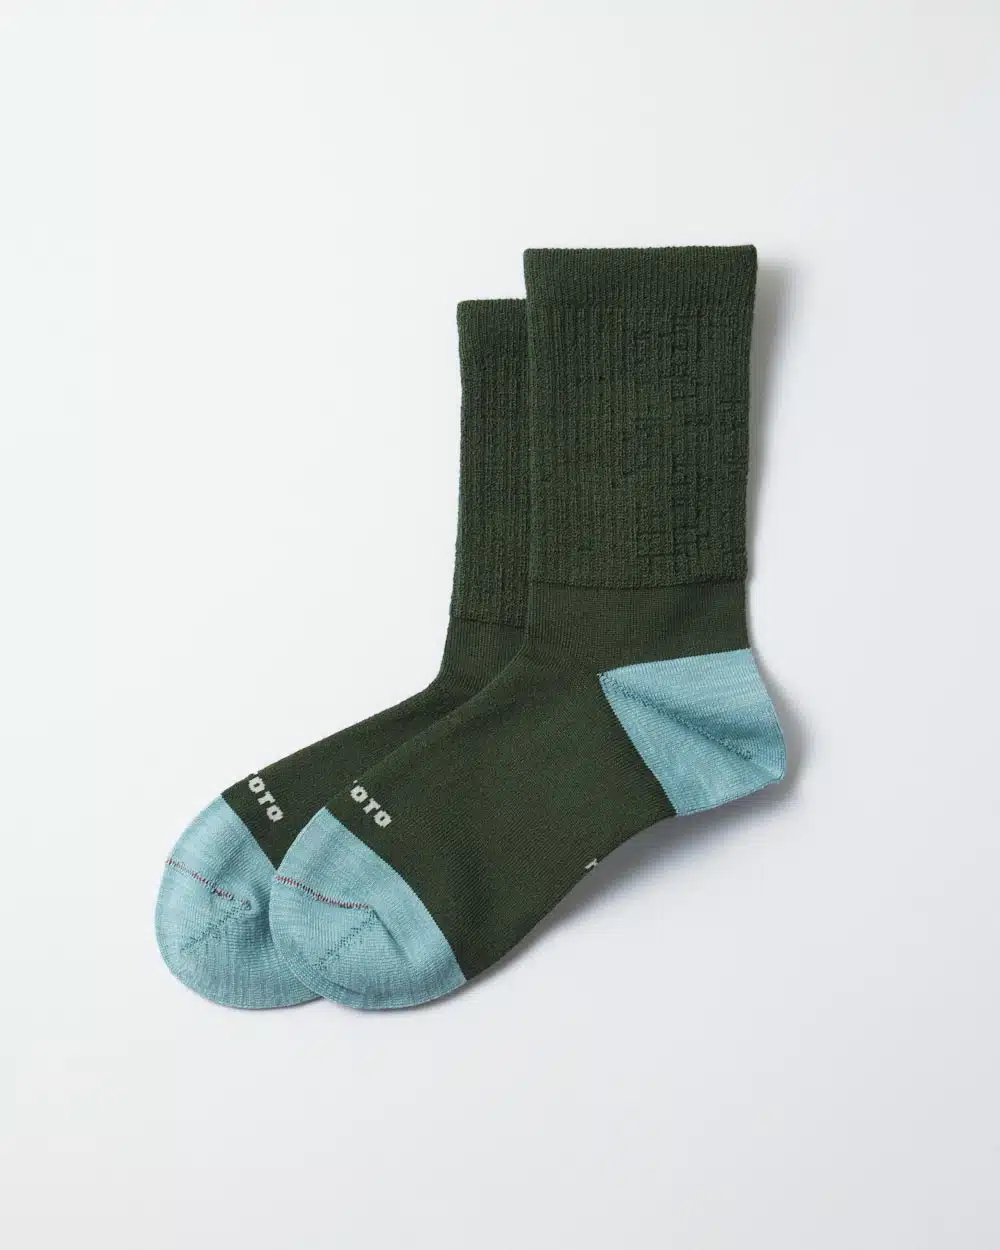 RoToTo Hybrid Crew Merino Socks - Dark Green/Light Blue